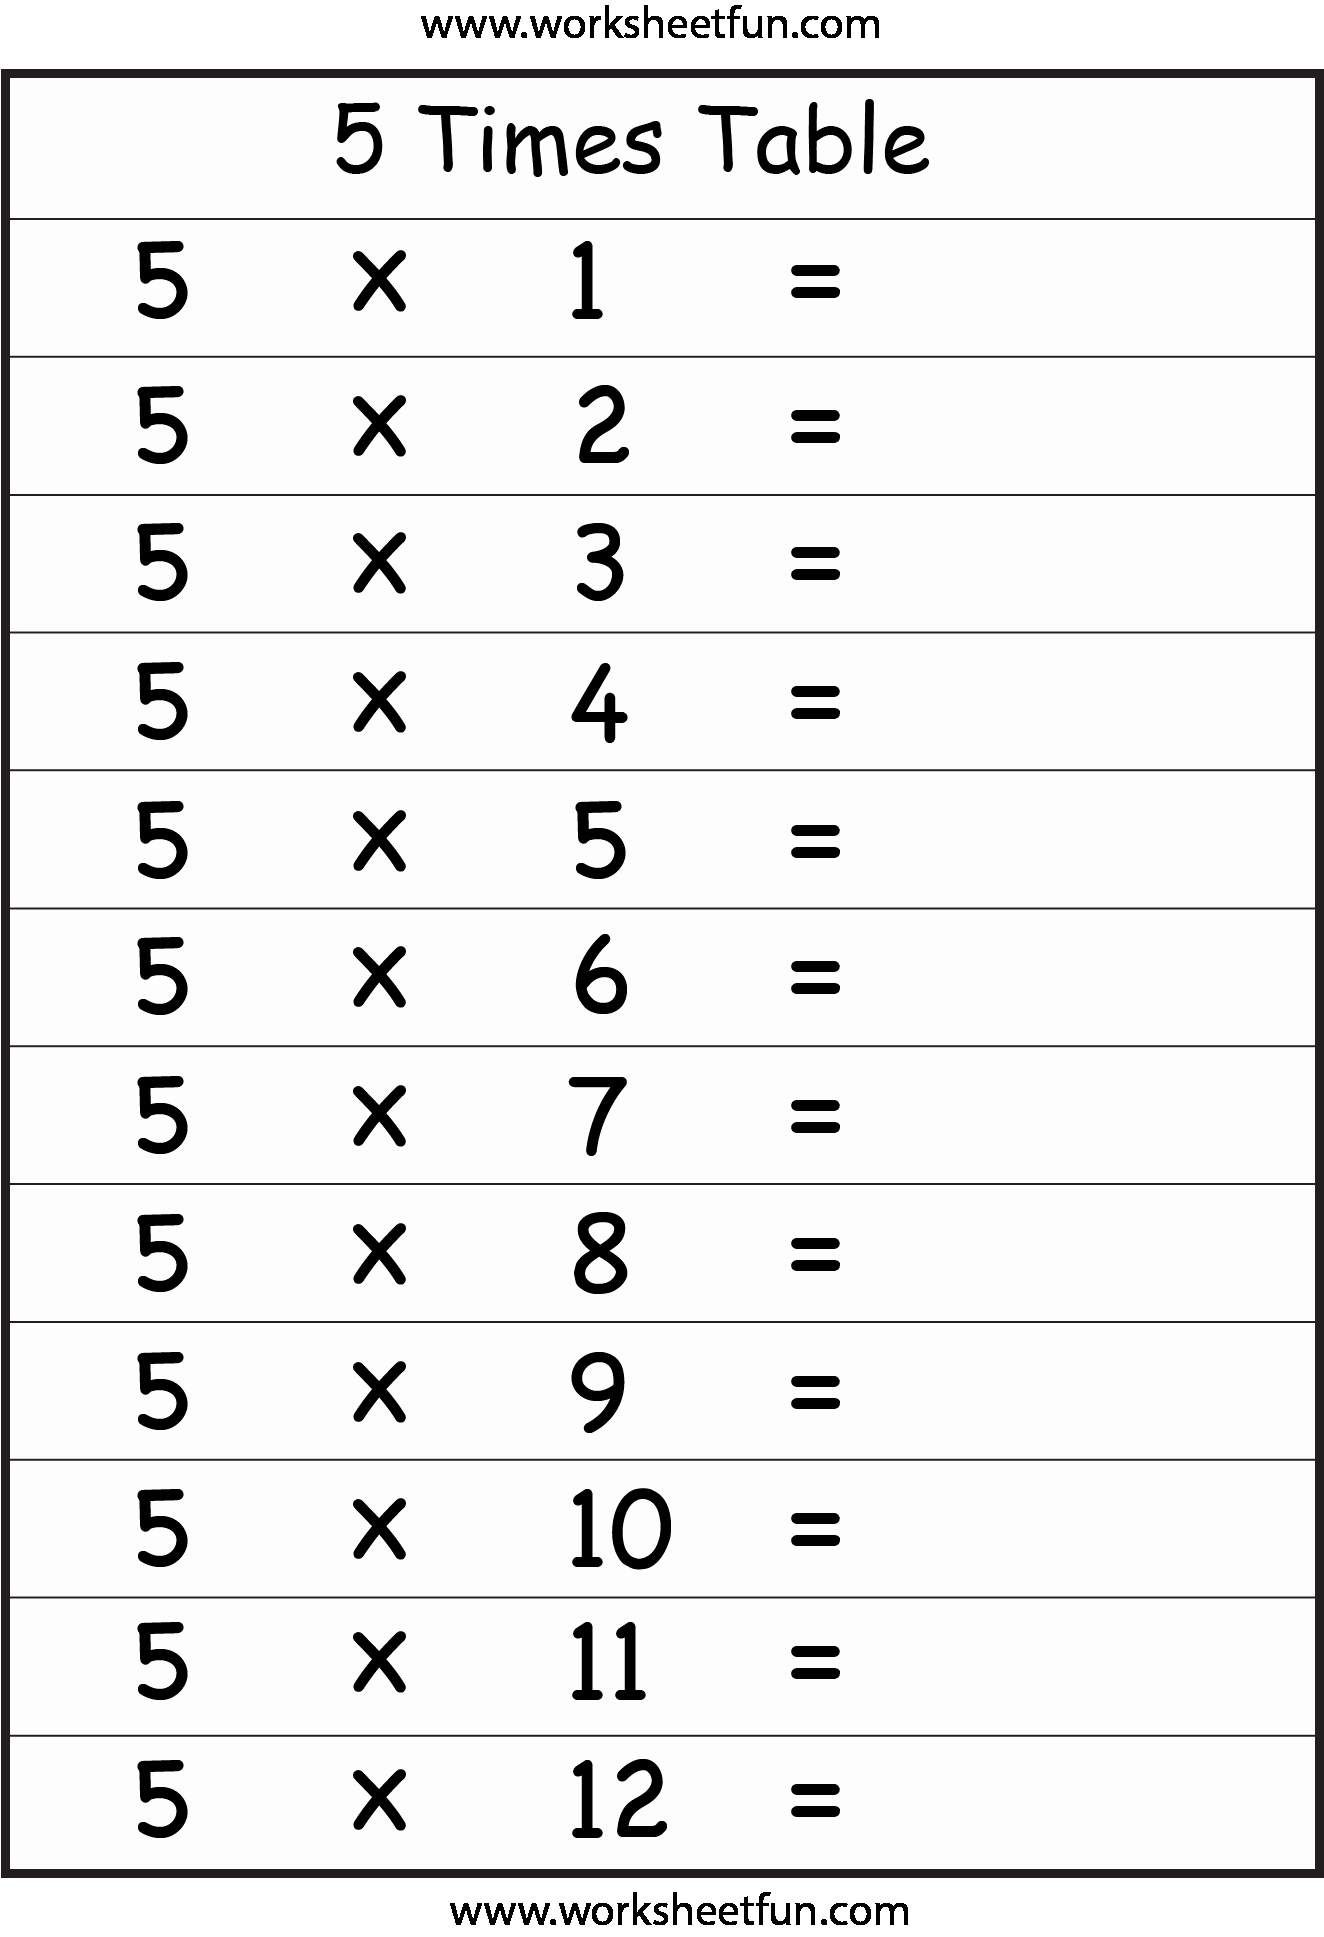 Free Printable Times Tables Worksheets Fresh Multiplication Times Tables Worksheets – 2 3 4 5 6 7